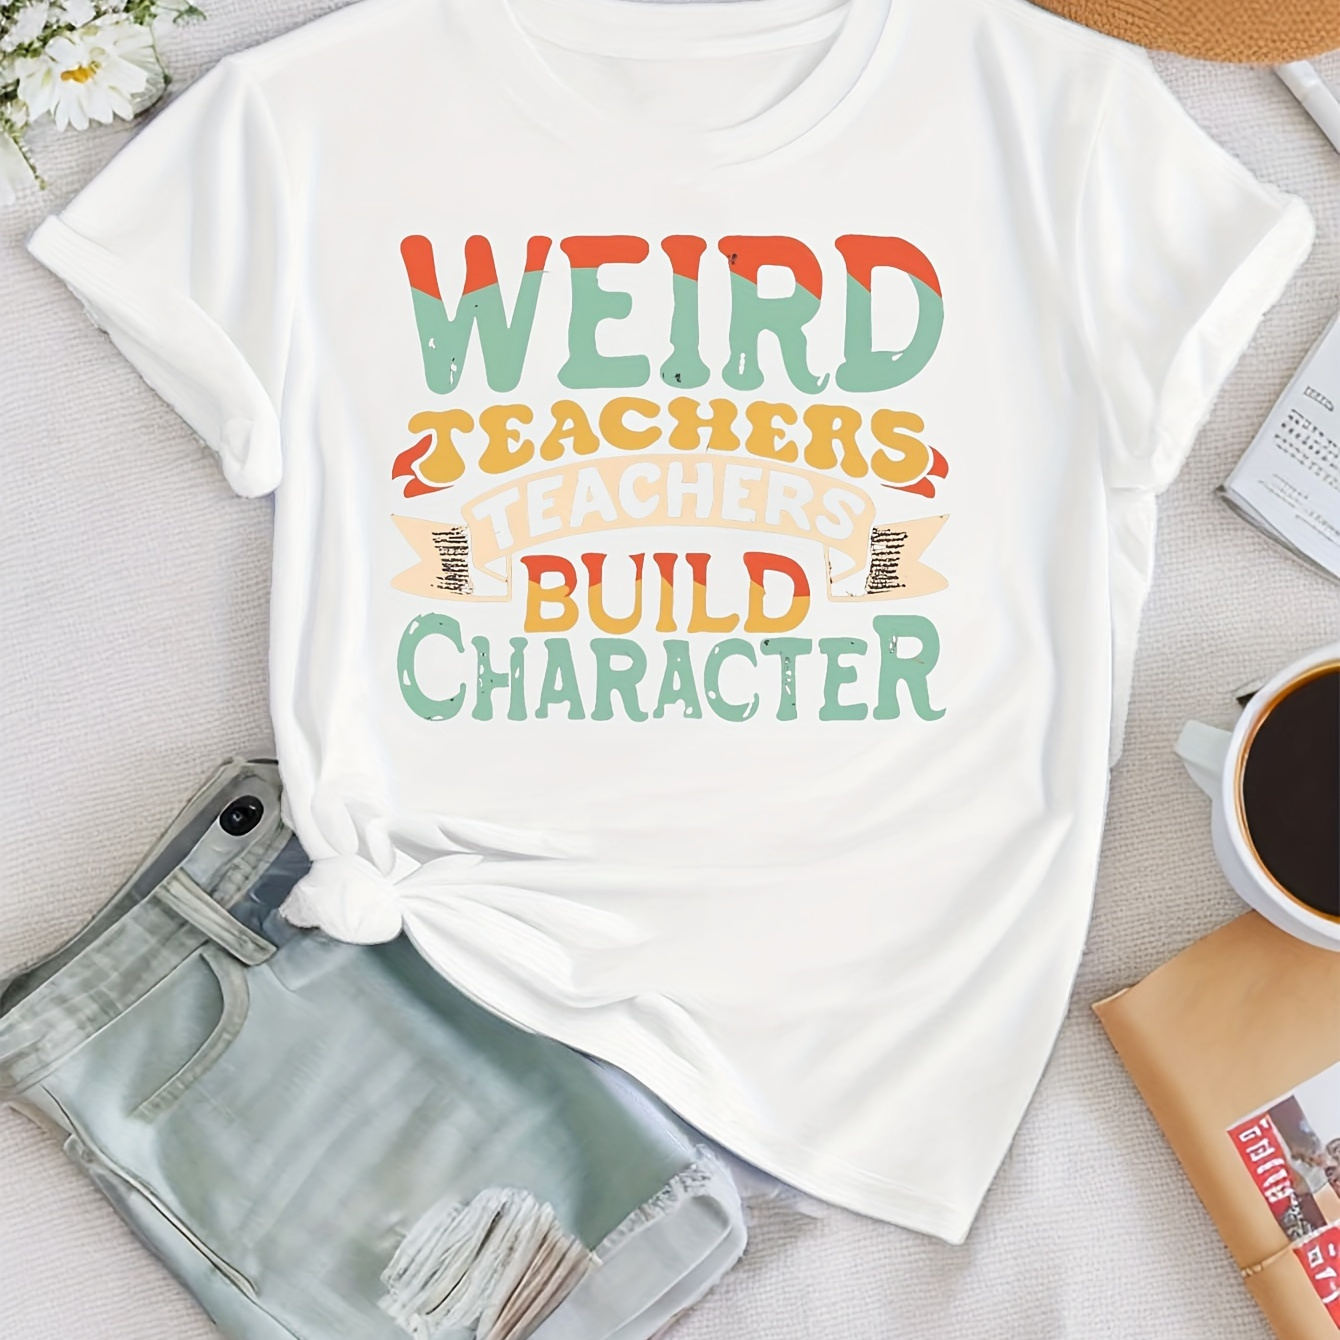 

Weird Teachers Build Character Print T-shirt, Short Sleeve Crew Neck Casual Top For Summer & Spring, Women's Clothing